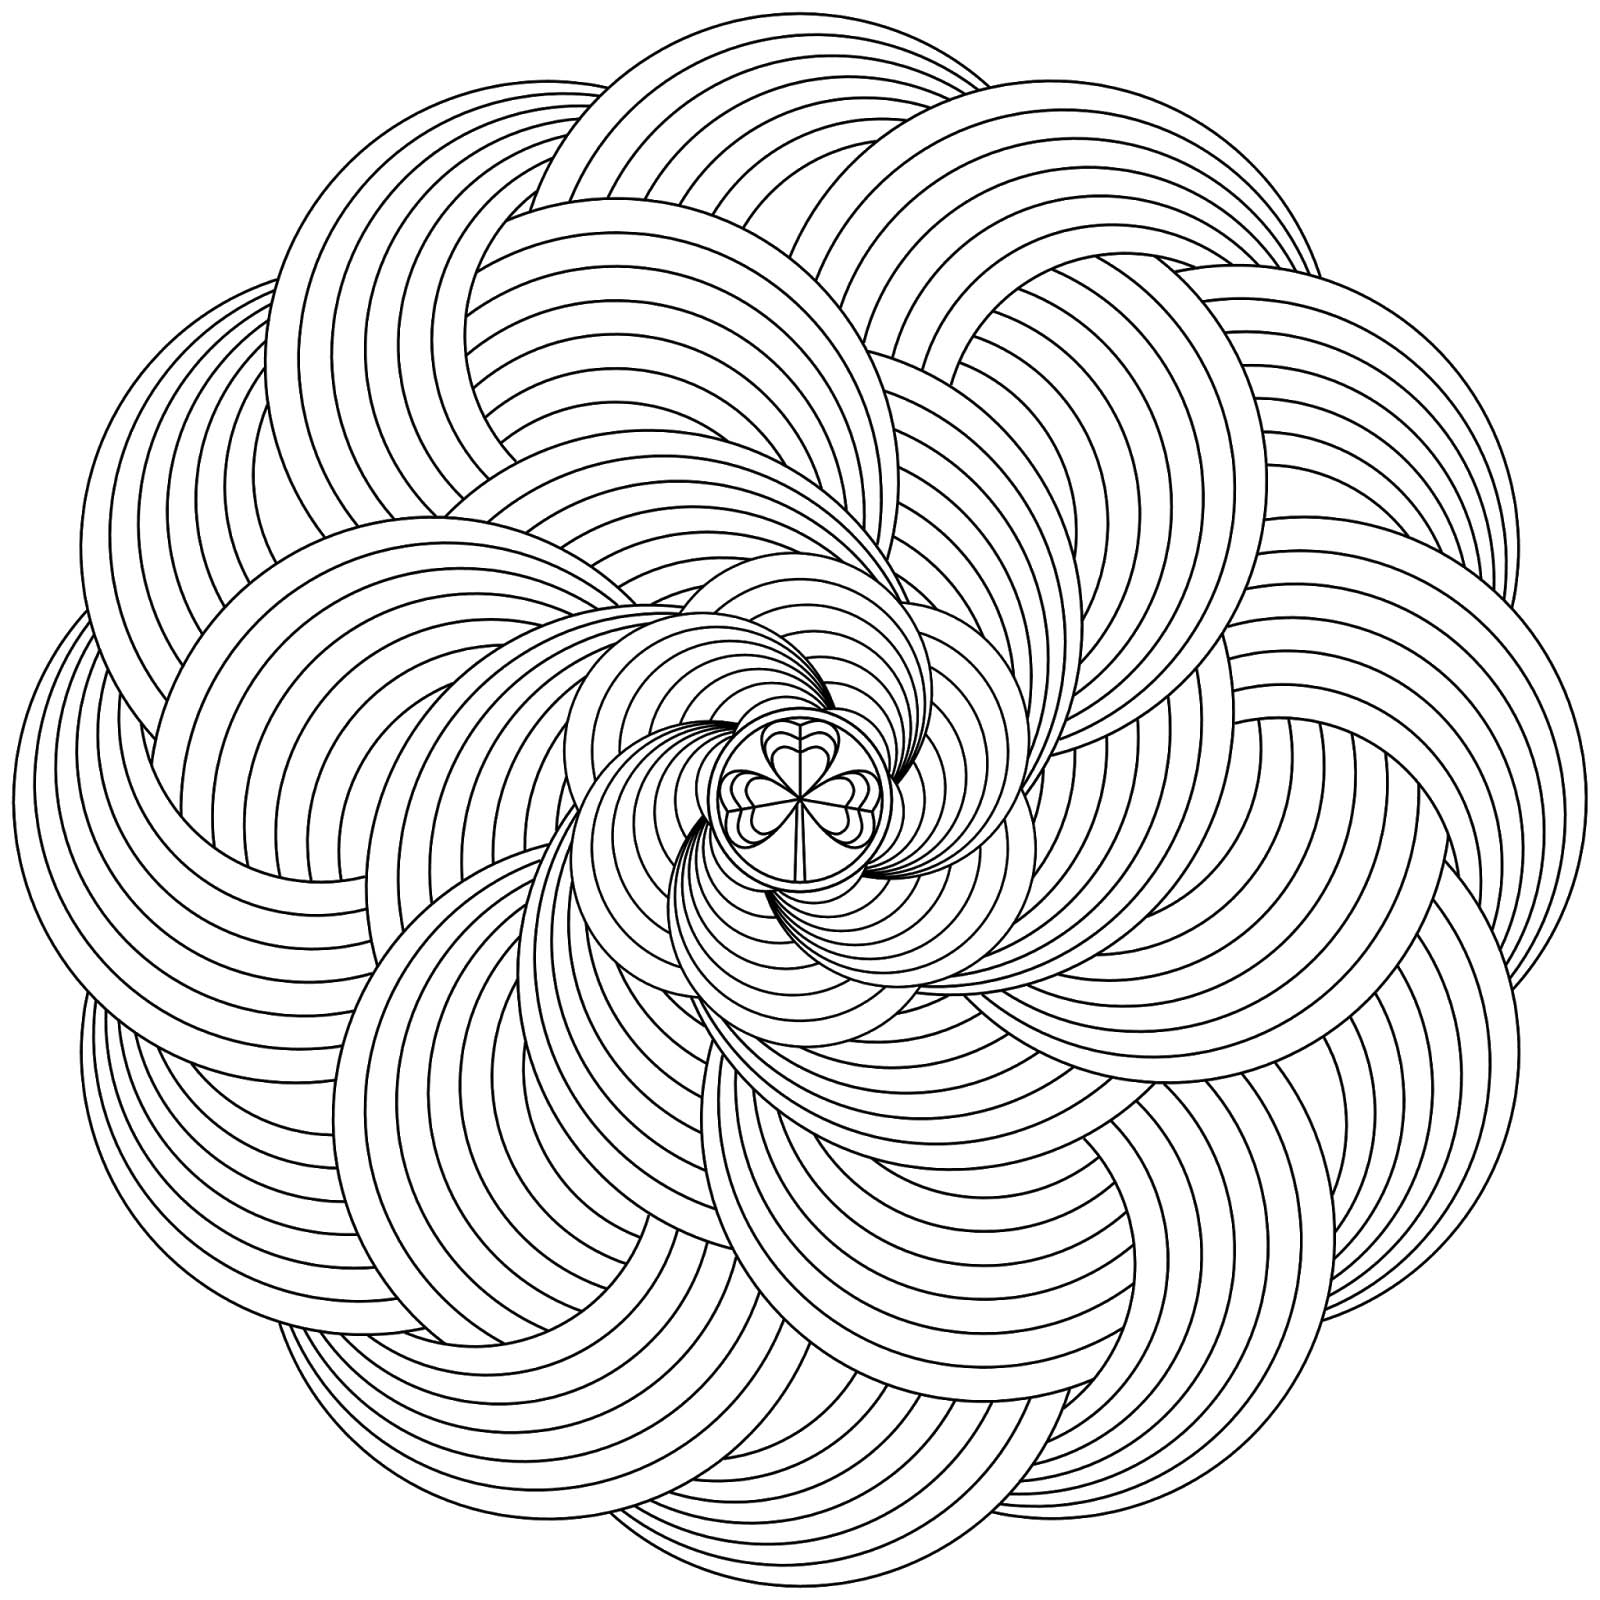 Adult coloring book spiral mandala black and white